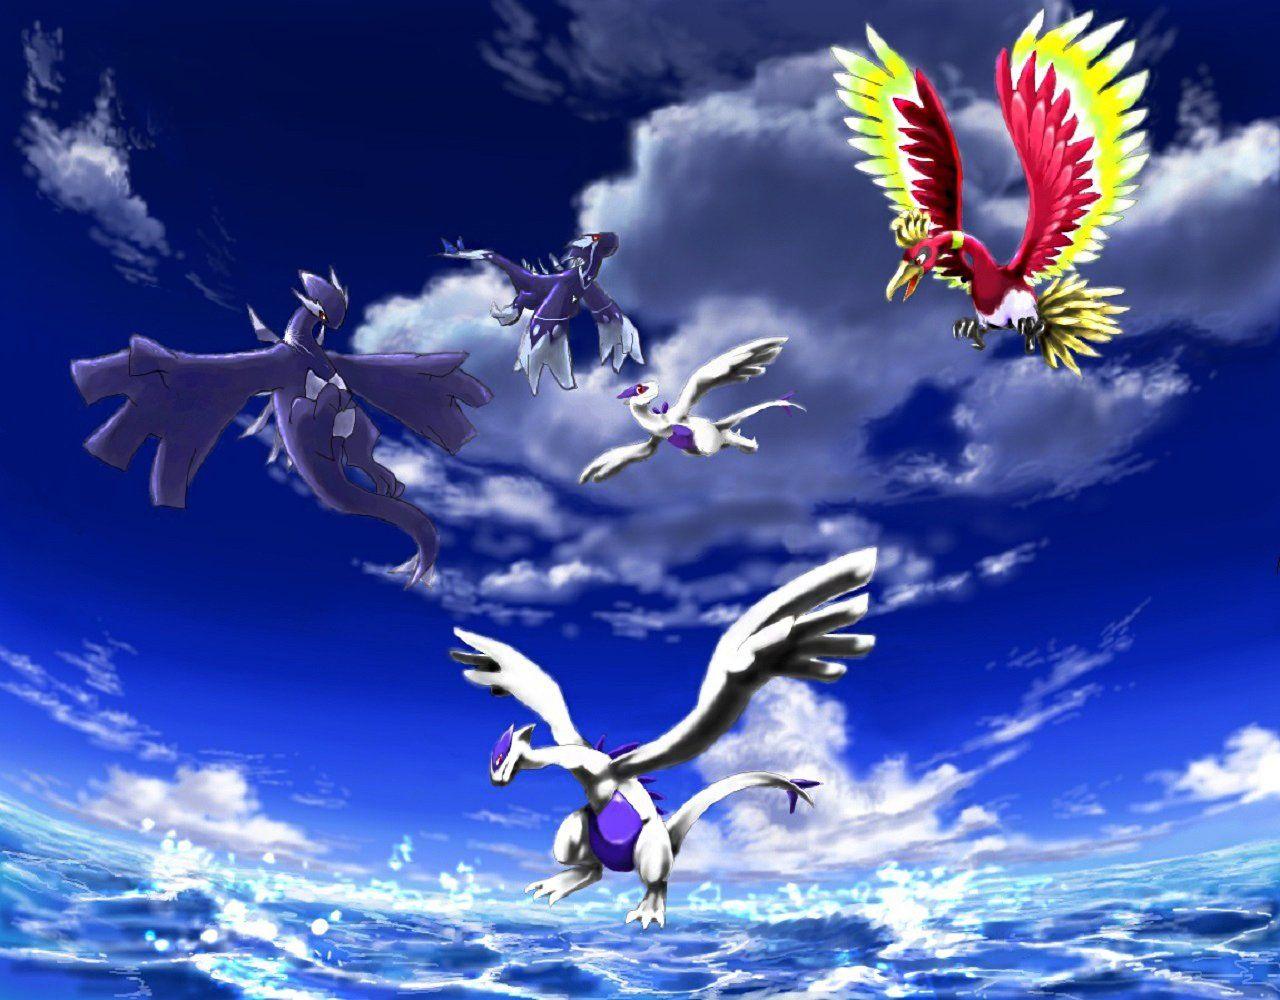 Lugia (Pokémon) HD Wallpaper and Background Image